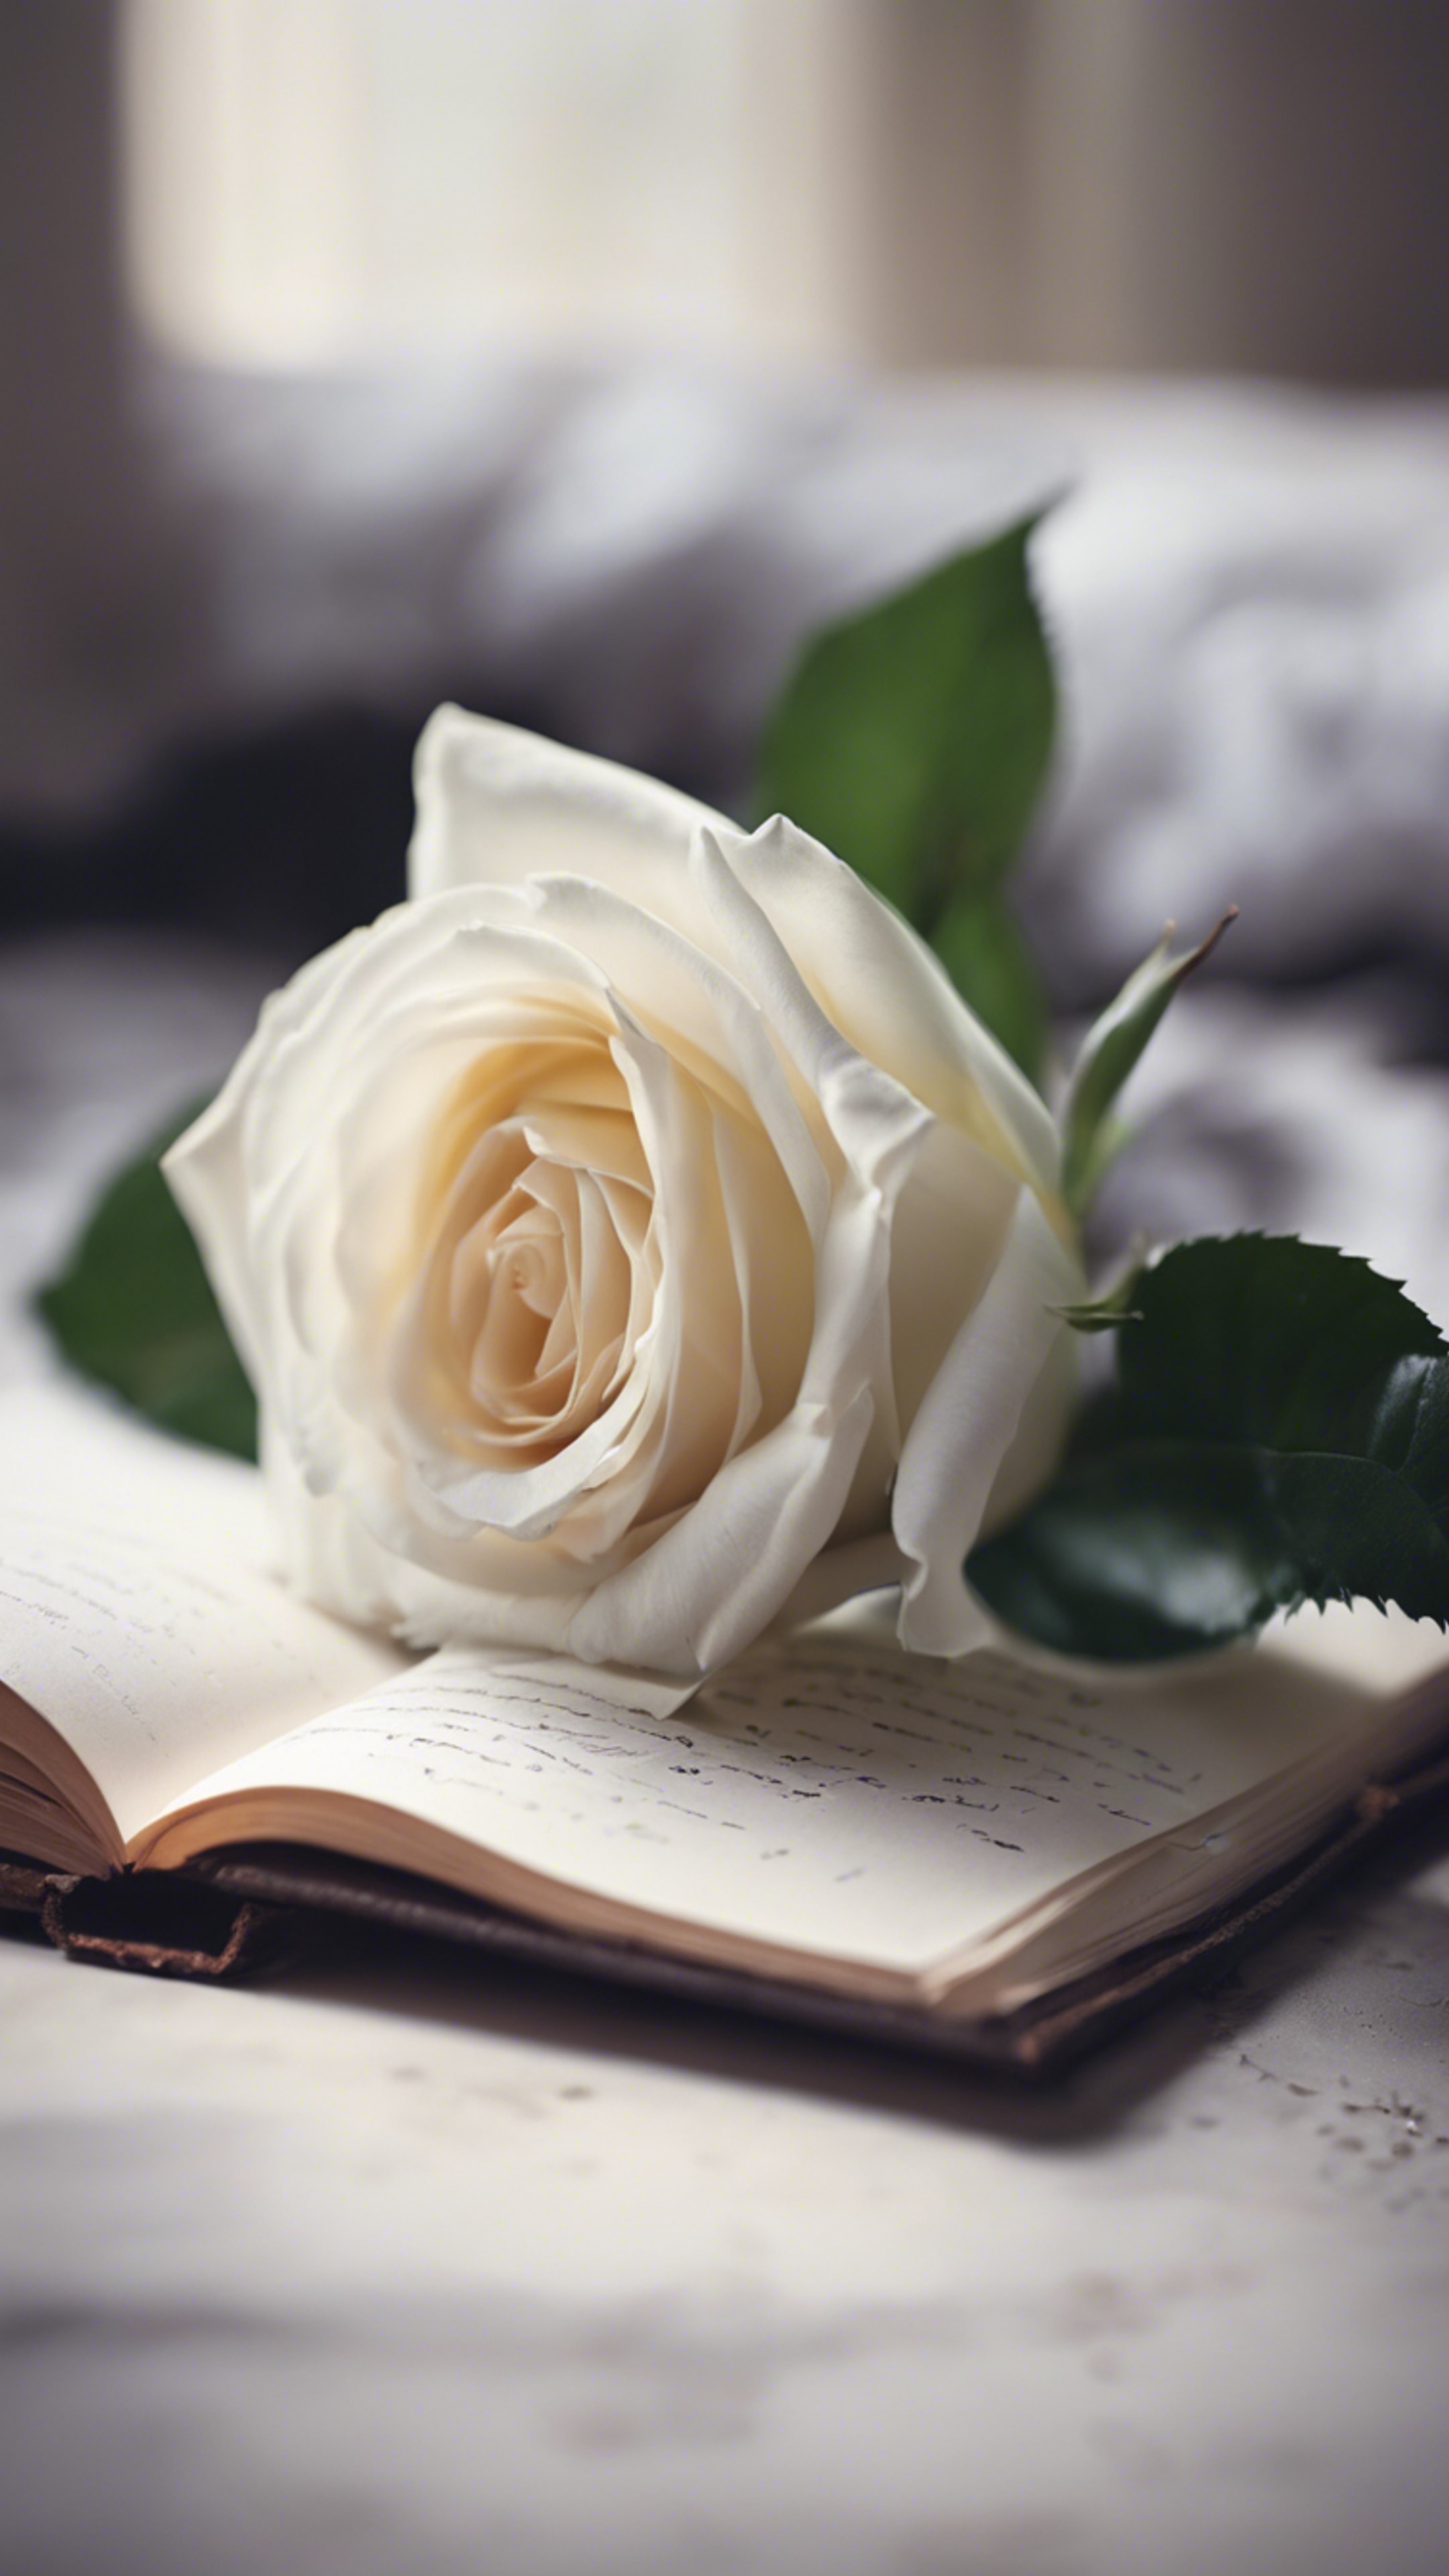 A handwritten confession of love adorned by a fresh, white rose. Ταπετσαρία[ca91da3bae694a85a8d6]